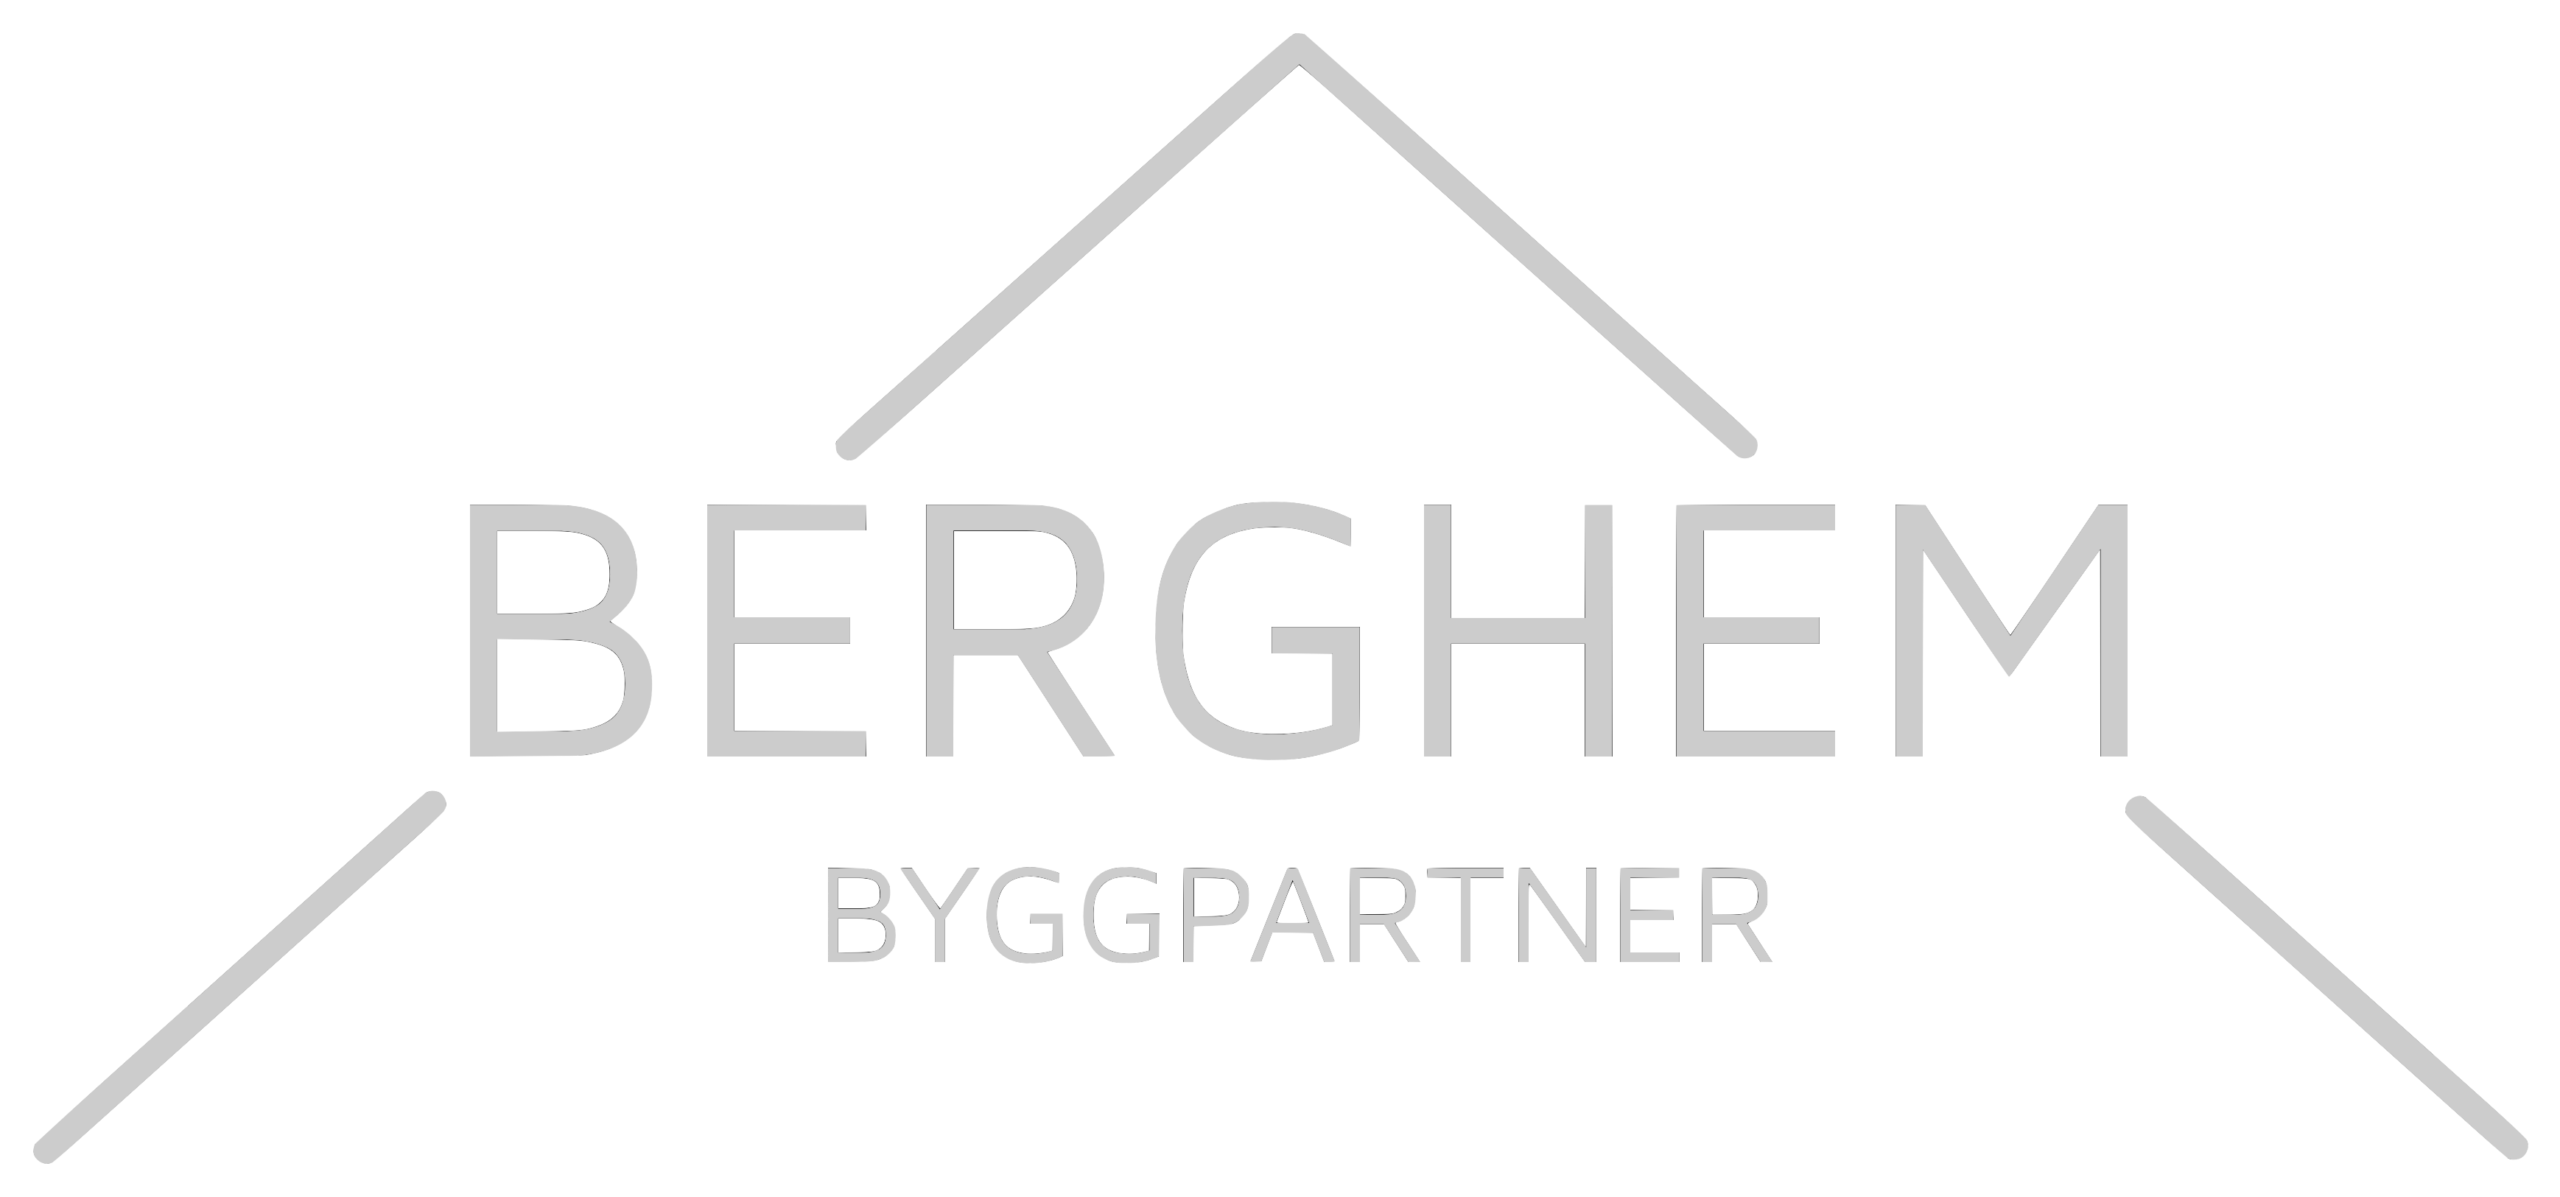 Berghem Byggpartner AB